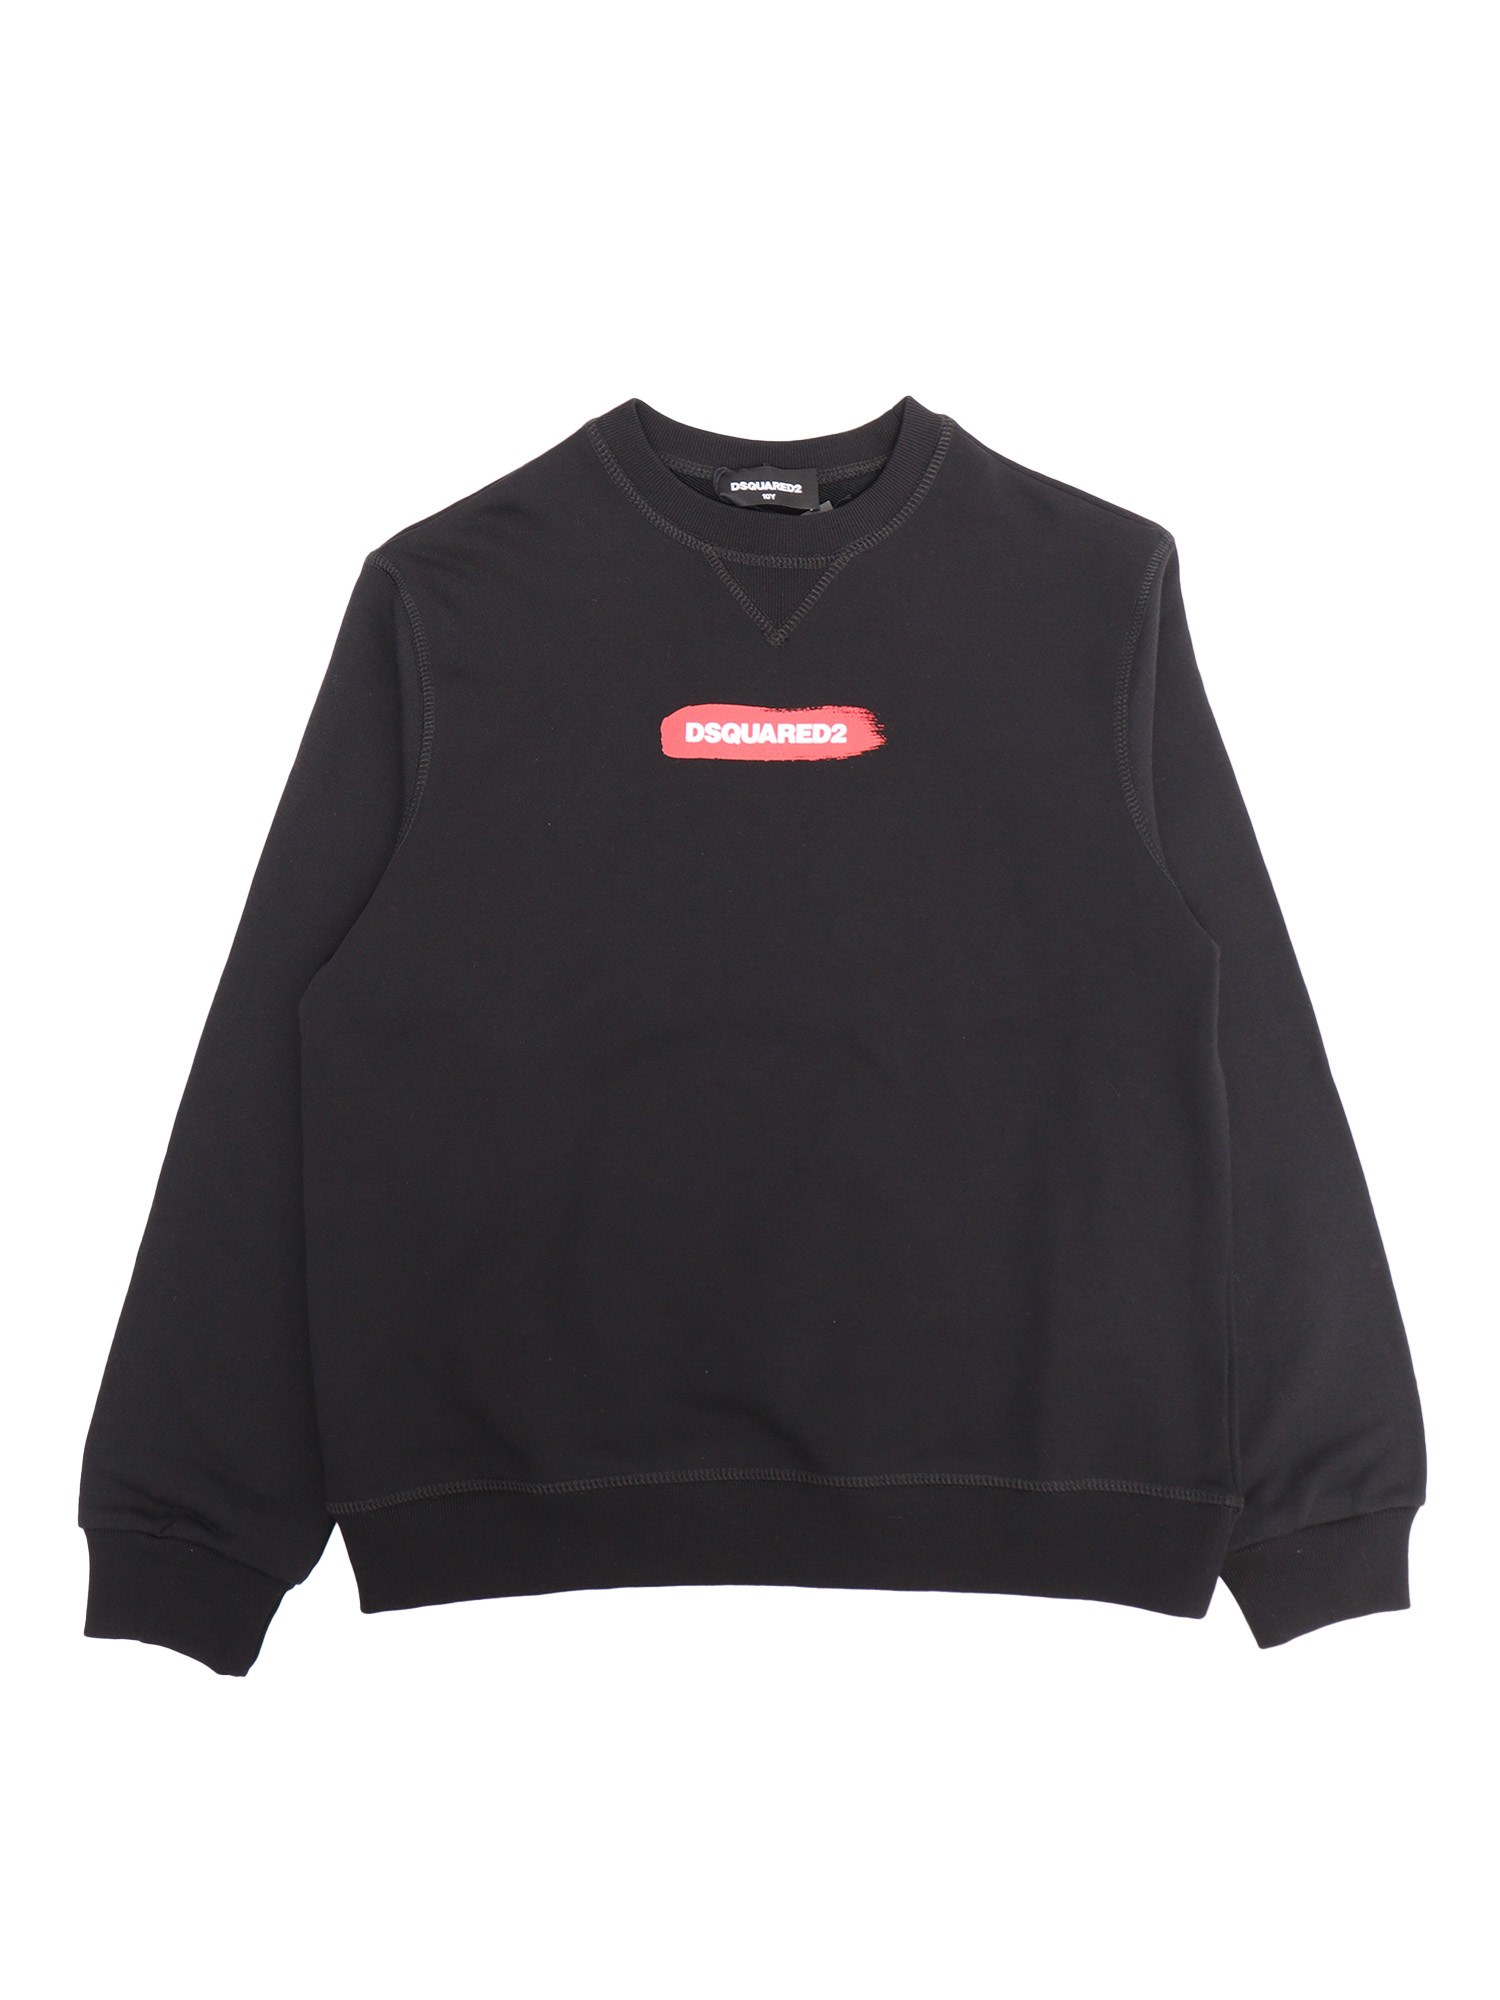 Shop D-squared2 Child Sweatshirt In Black